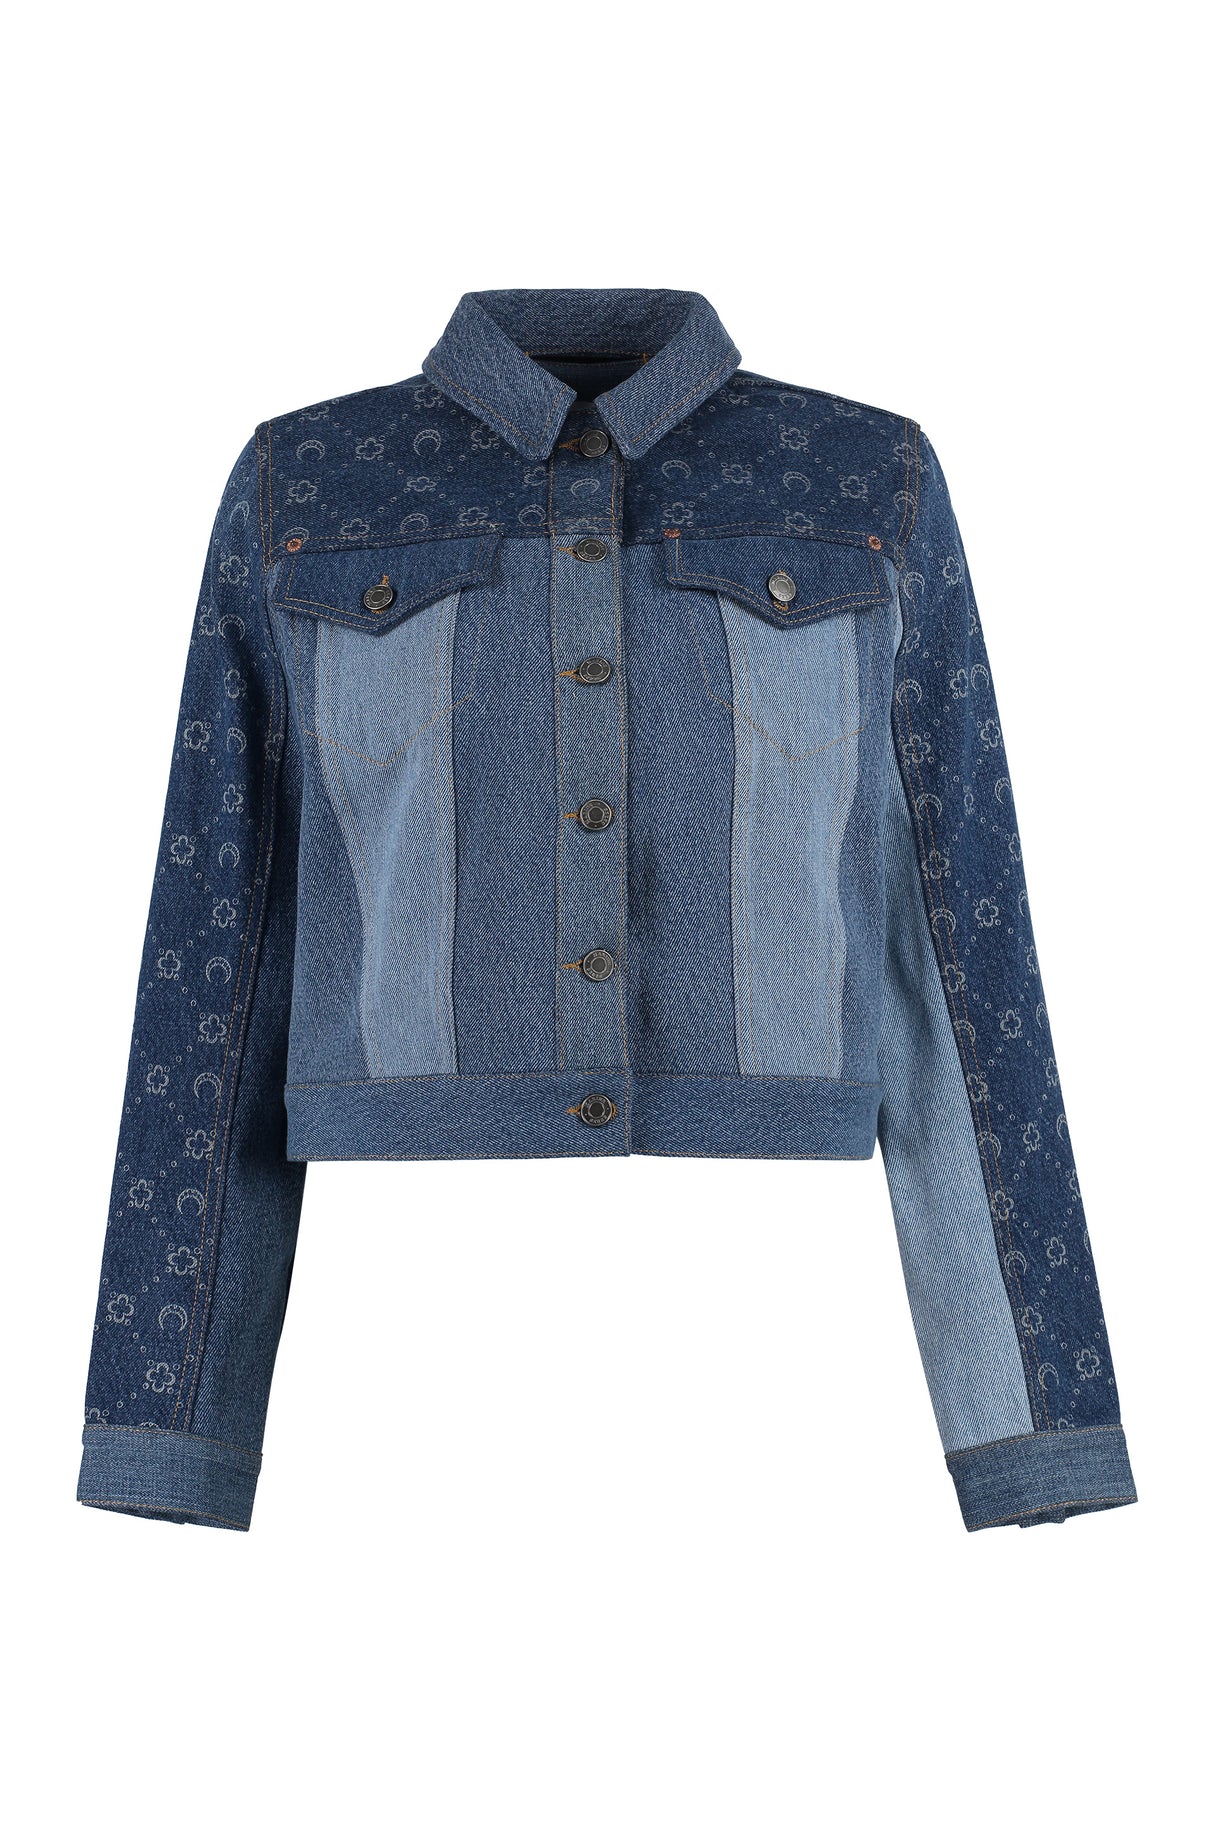 MARINE SERRE Blue Denim Jacket with Monogram Print and Contrast Stitching for Women